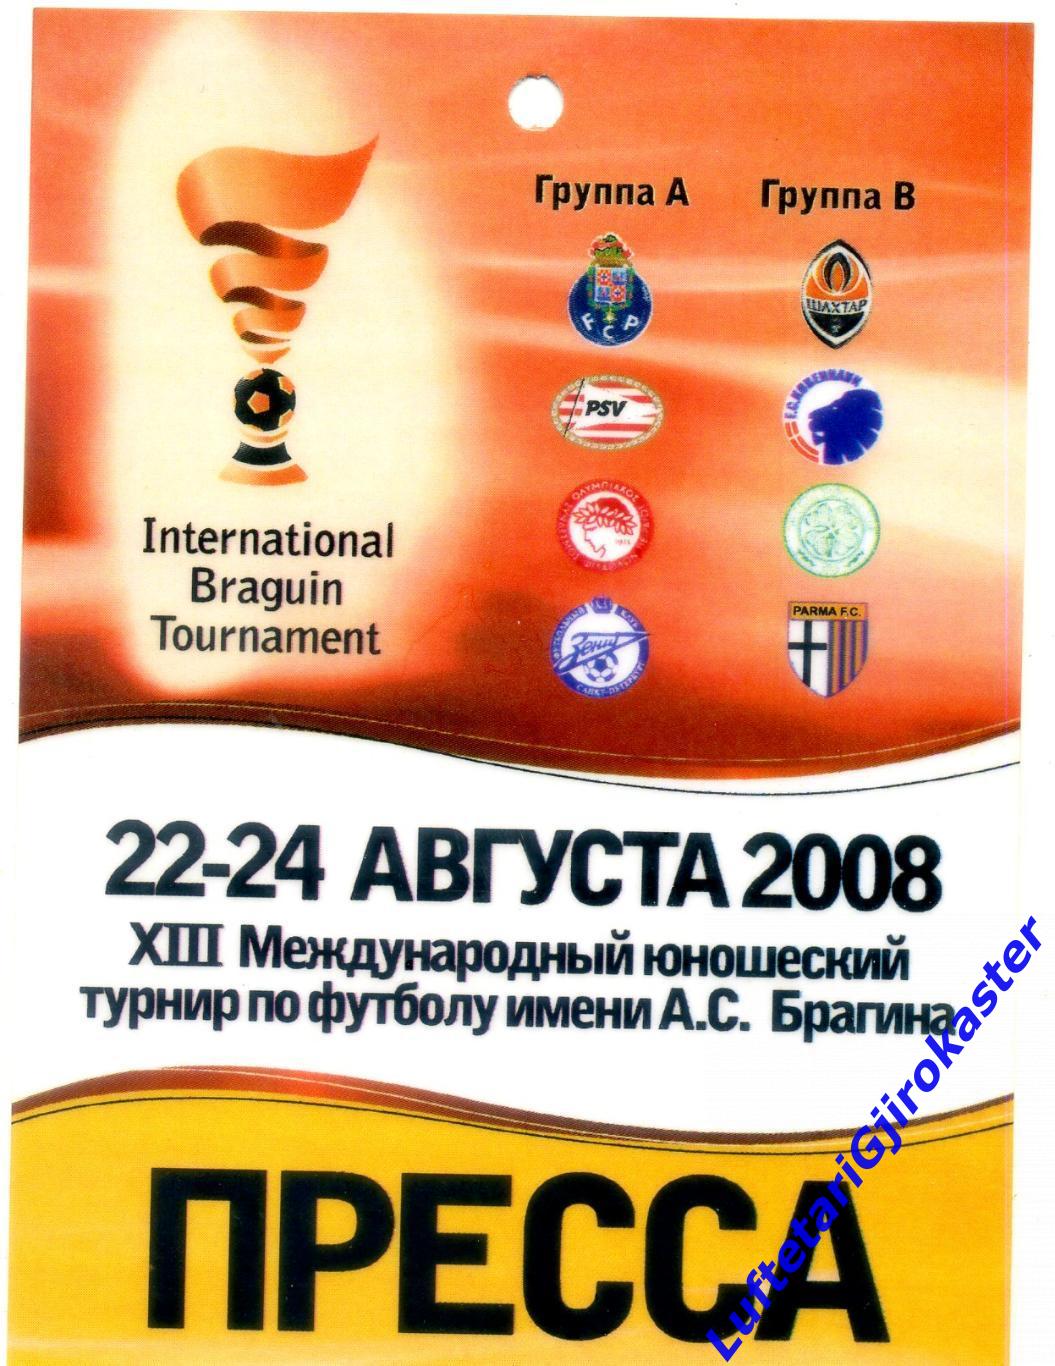 Шахтер Донецк Зенит Селтик Олимпиакос Порто ПСВ Парма 2008 - Шарф Футболка +++++ 5